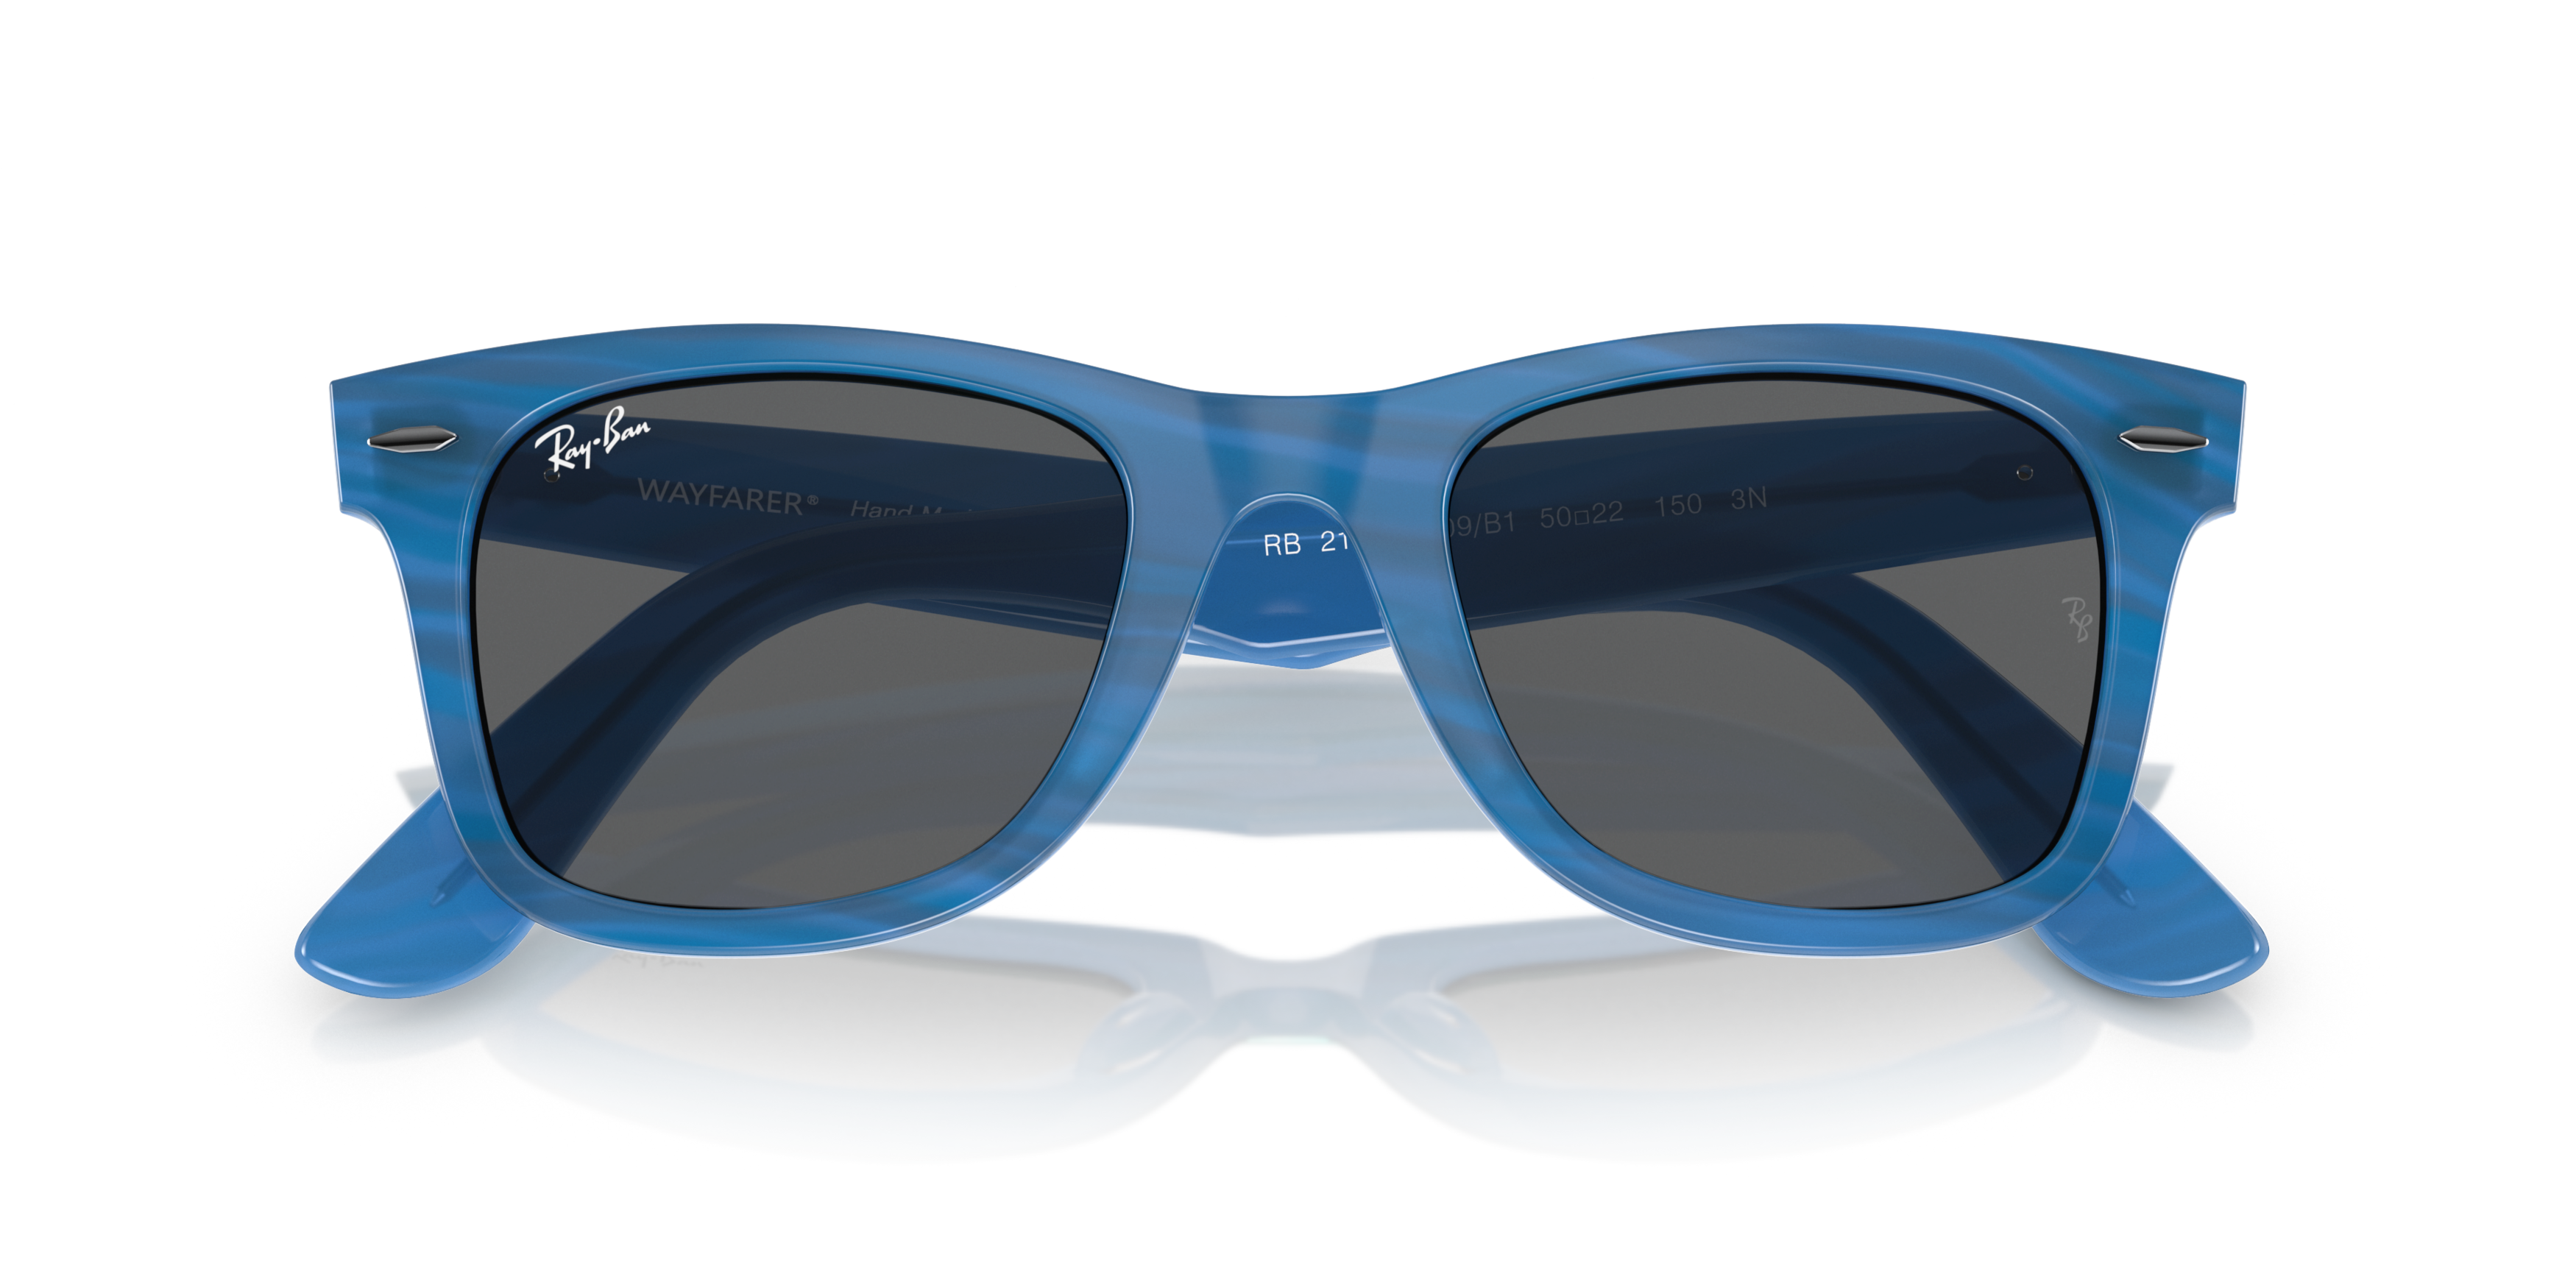 [products.image.folded] Ray-Ban Wayfarer RB 2140 Sunglasses